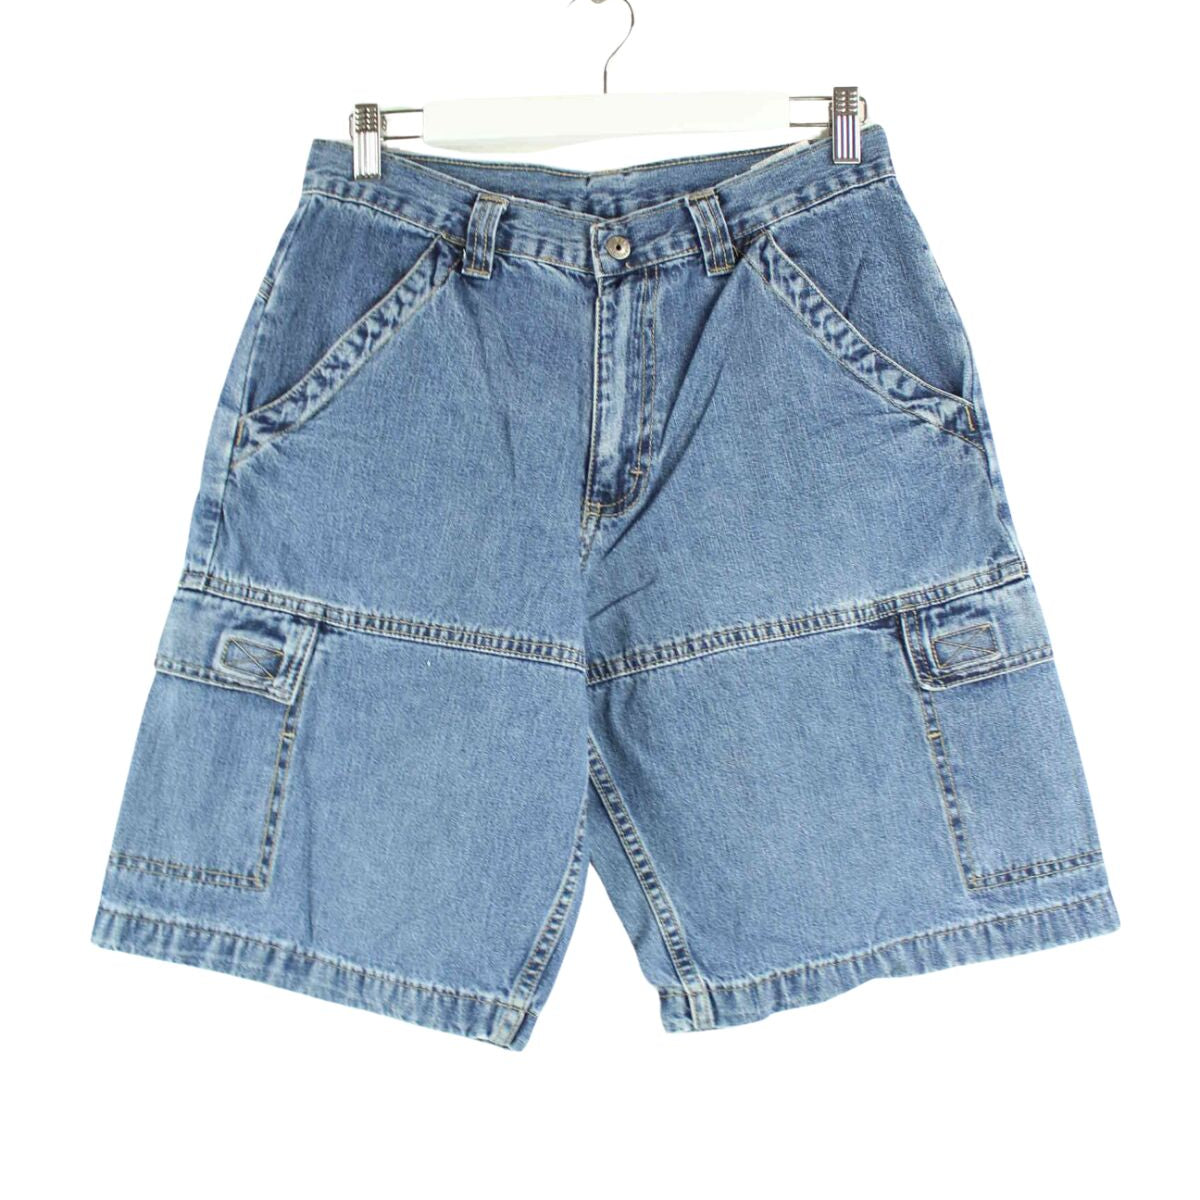 Wrangler Carpenter Jorts / Jeans Shorts Blau W26 (front image)